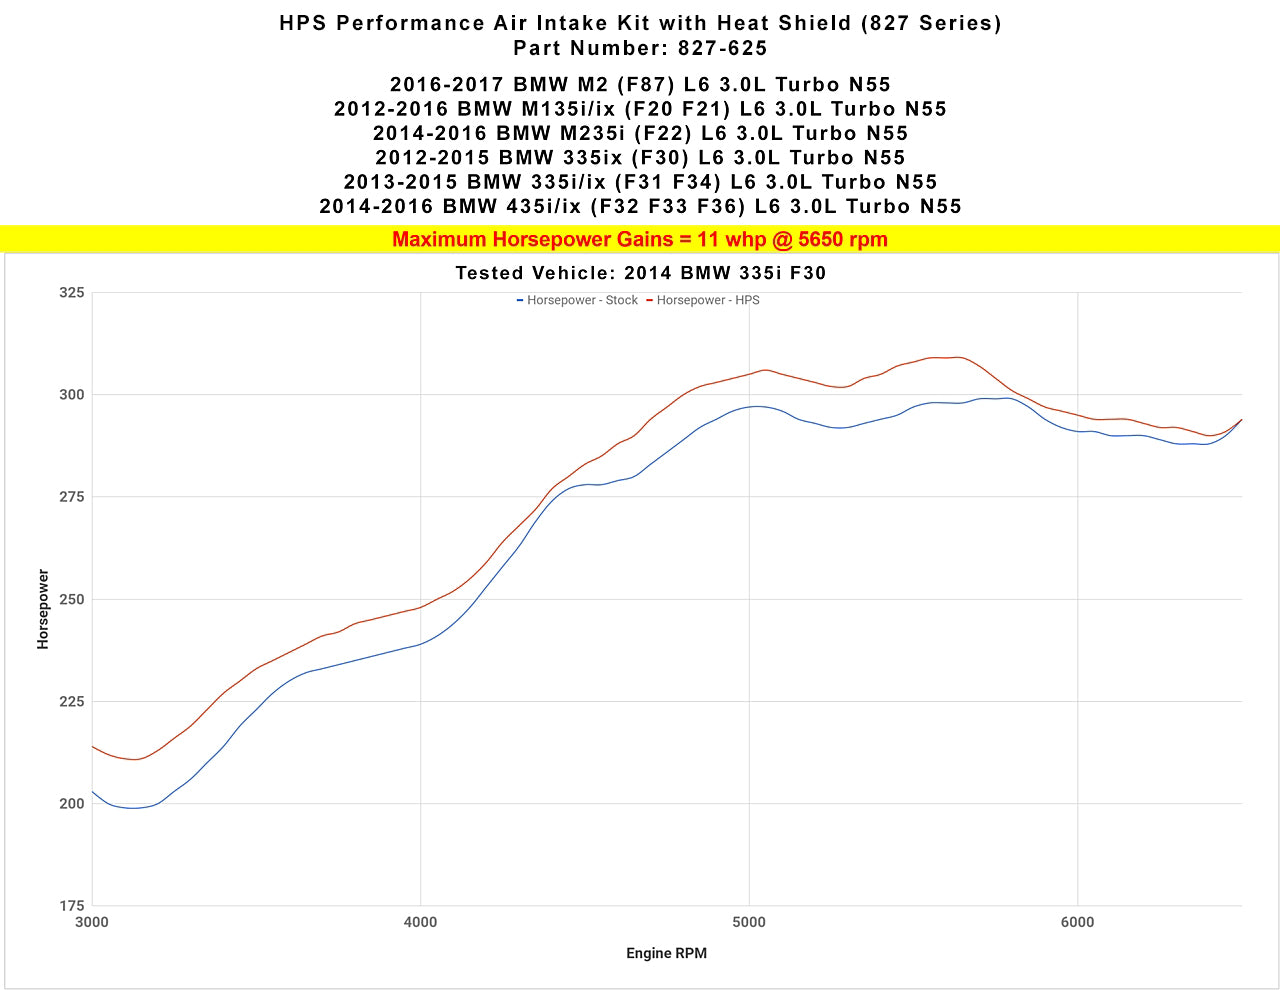 Dyno proven gains 11 whp HPS Performance Shortram Air Intake Kit 2012-2016 BMW M135i M135ix F20 F21 3.0L Turbo N55 827-625WB